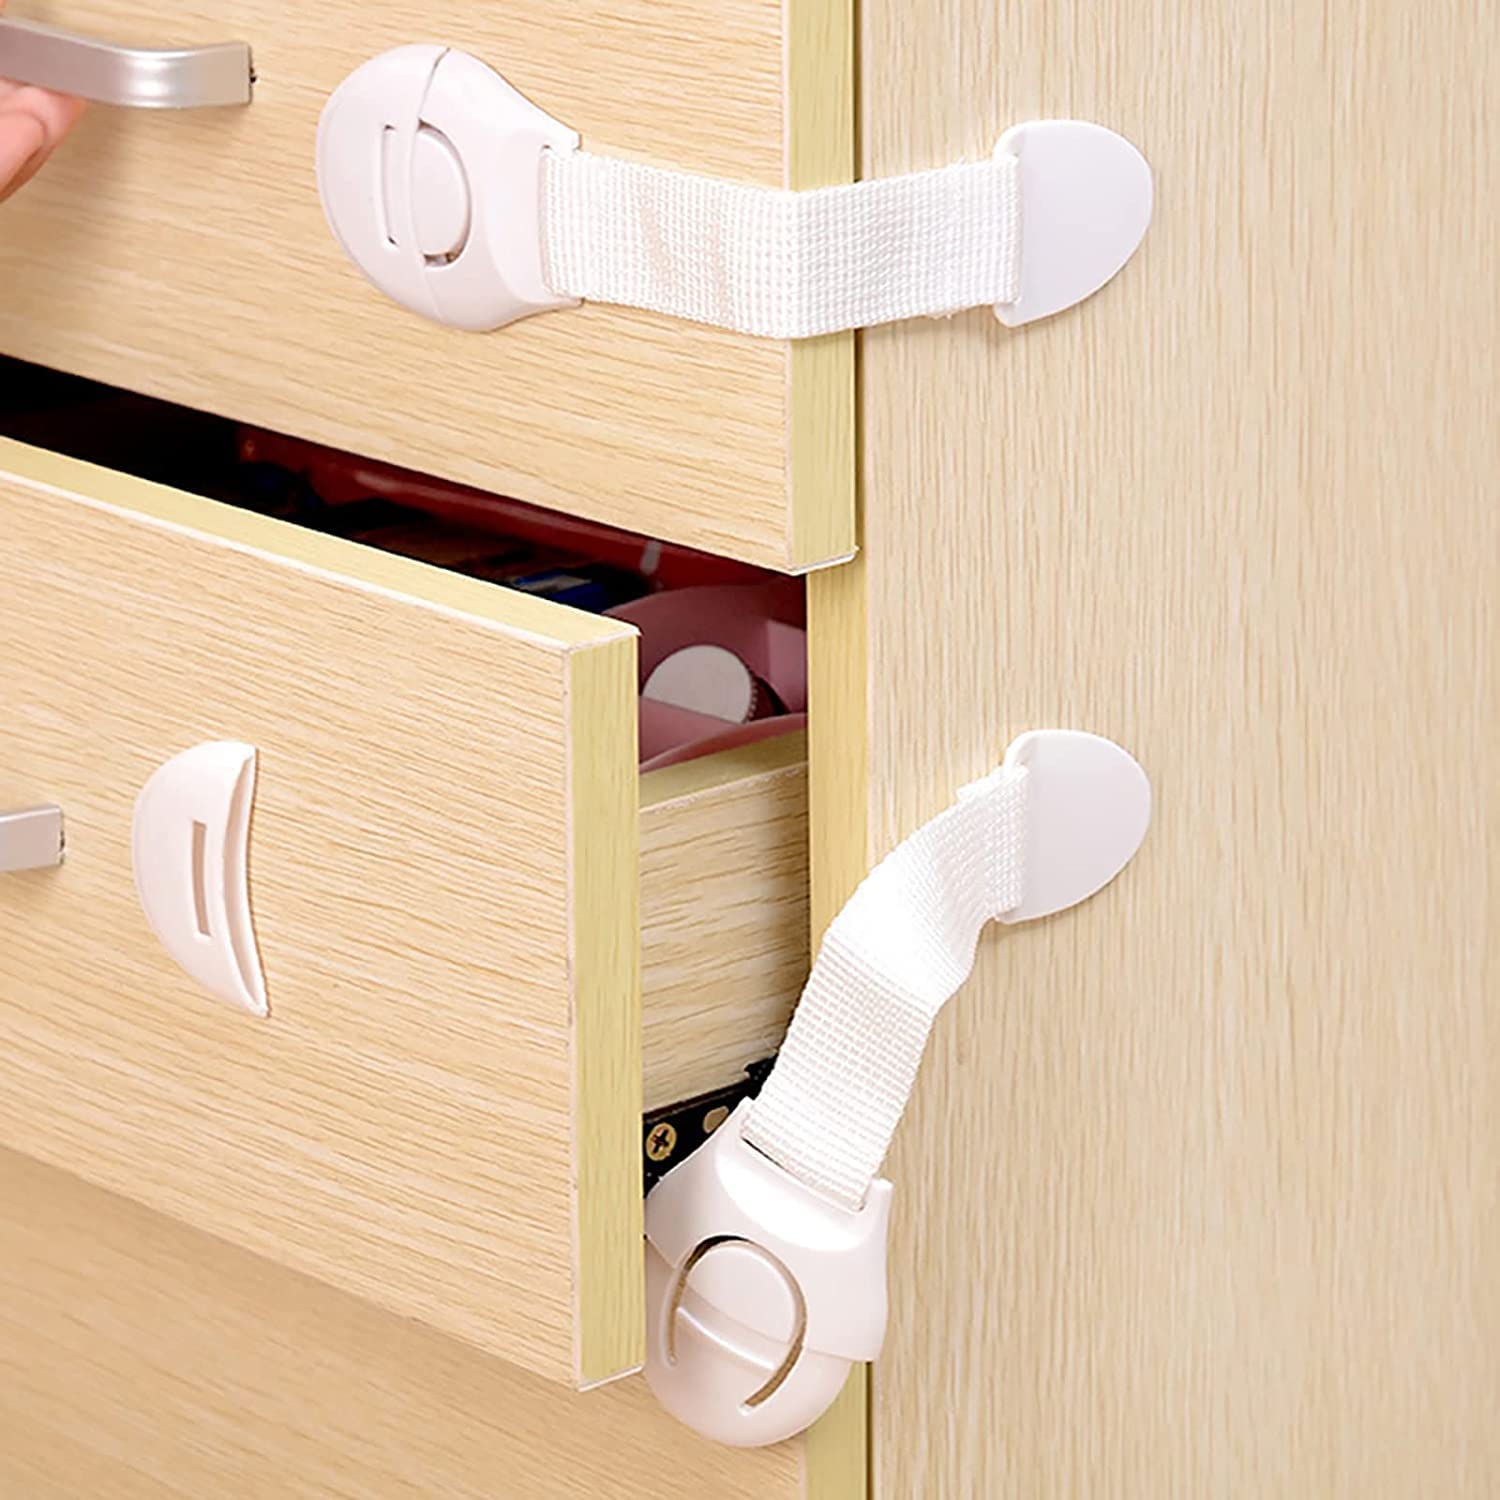 Refrigerator Locks Baby Fridge Locks Cabinet Drawer Door Lock for